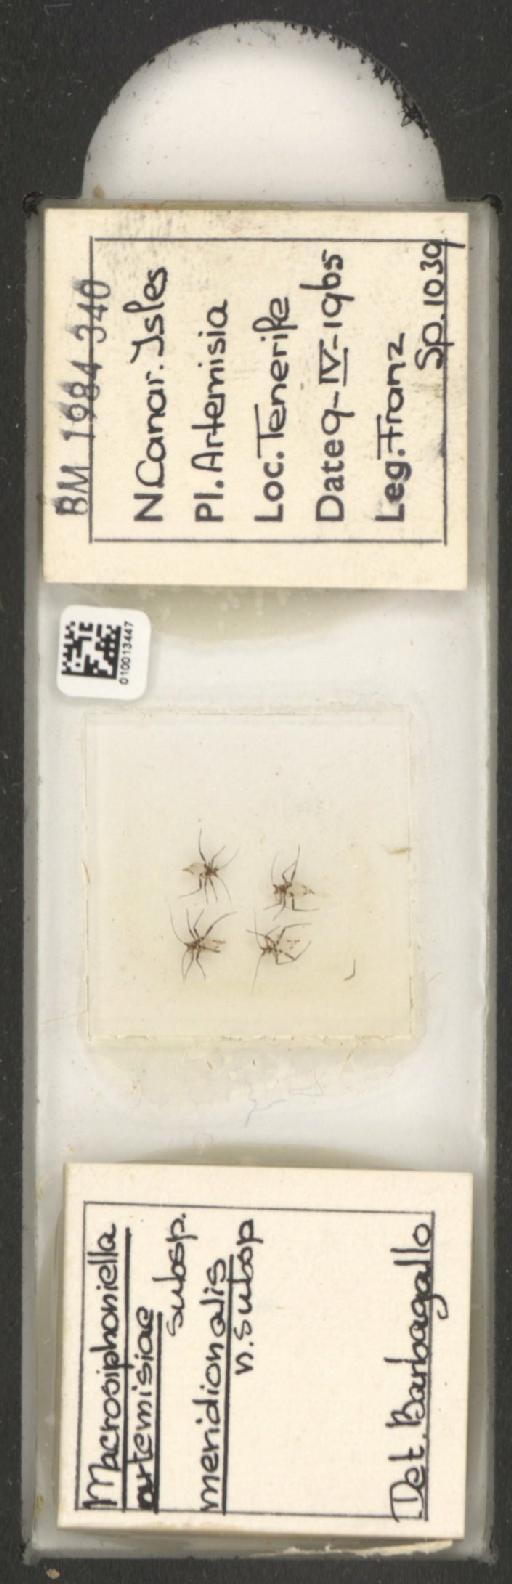 Macrosiphoniella artemisiae meridionalis Barbagallo, 1969 - 010013447_112659_1094716